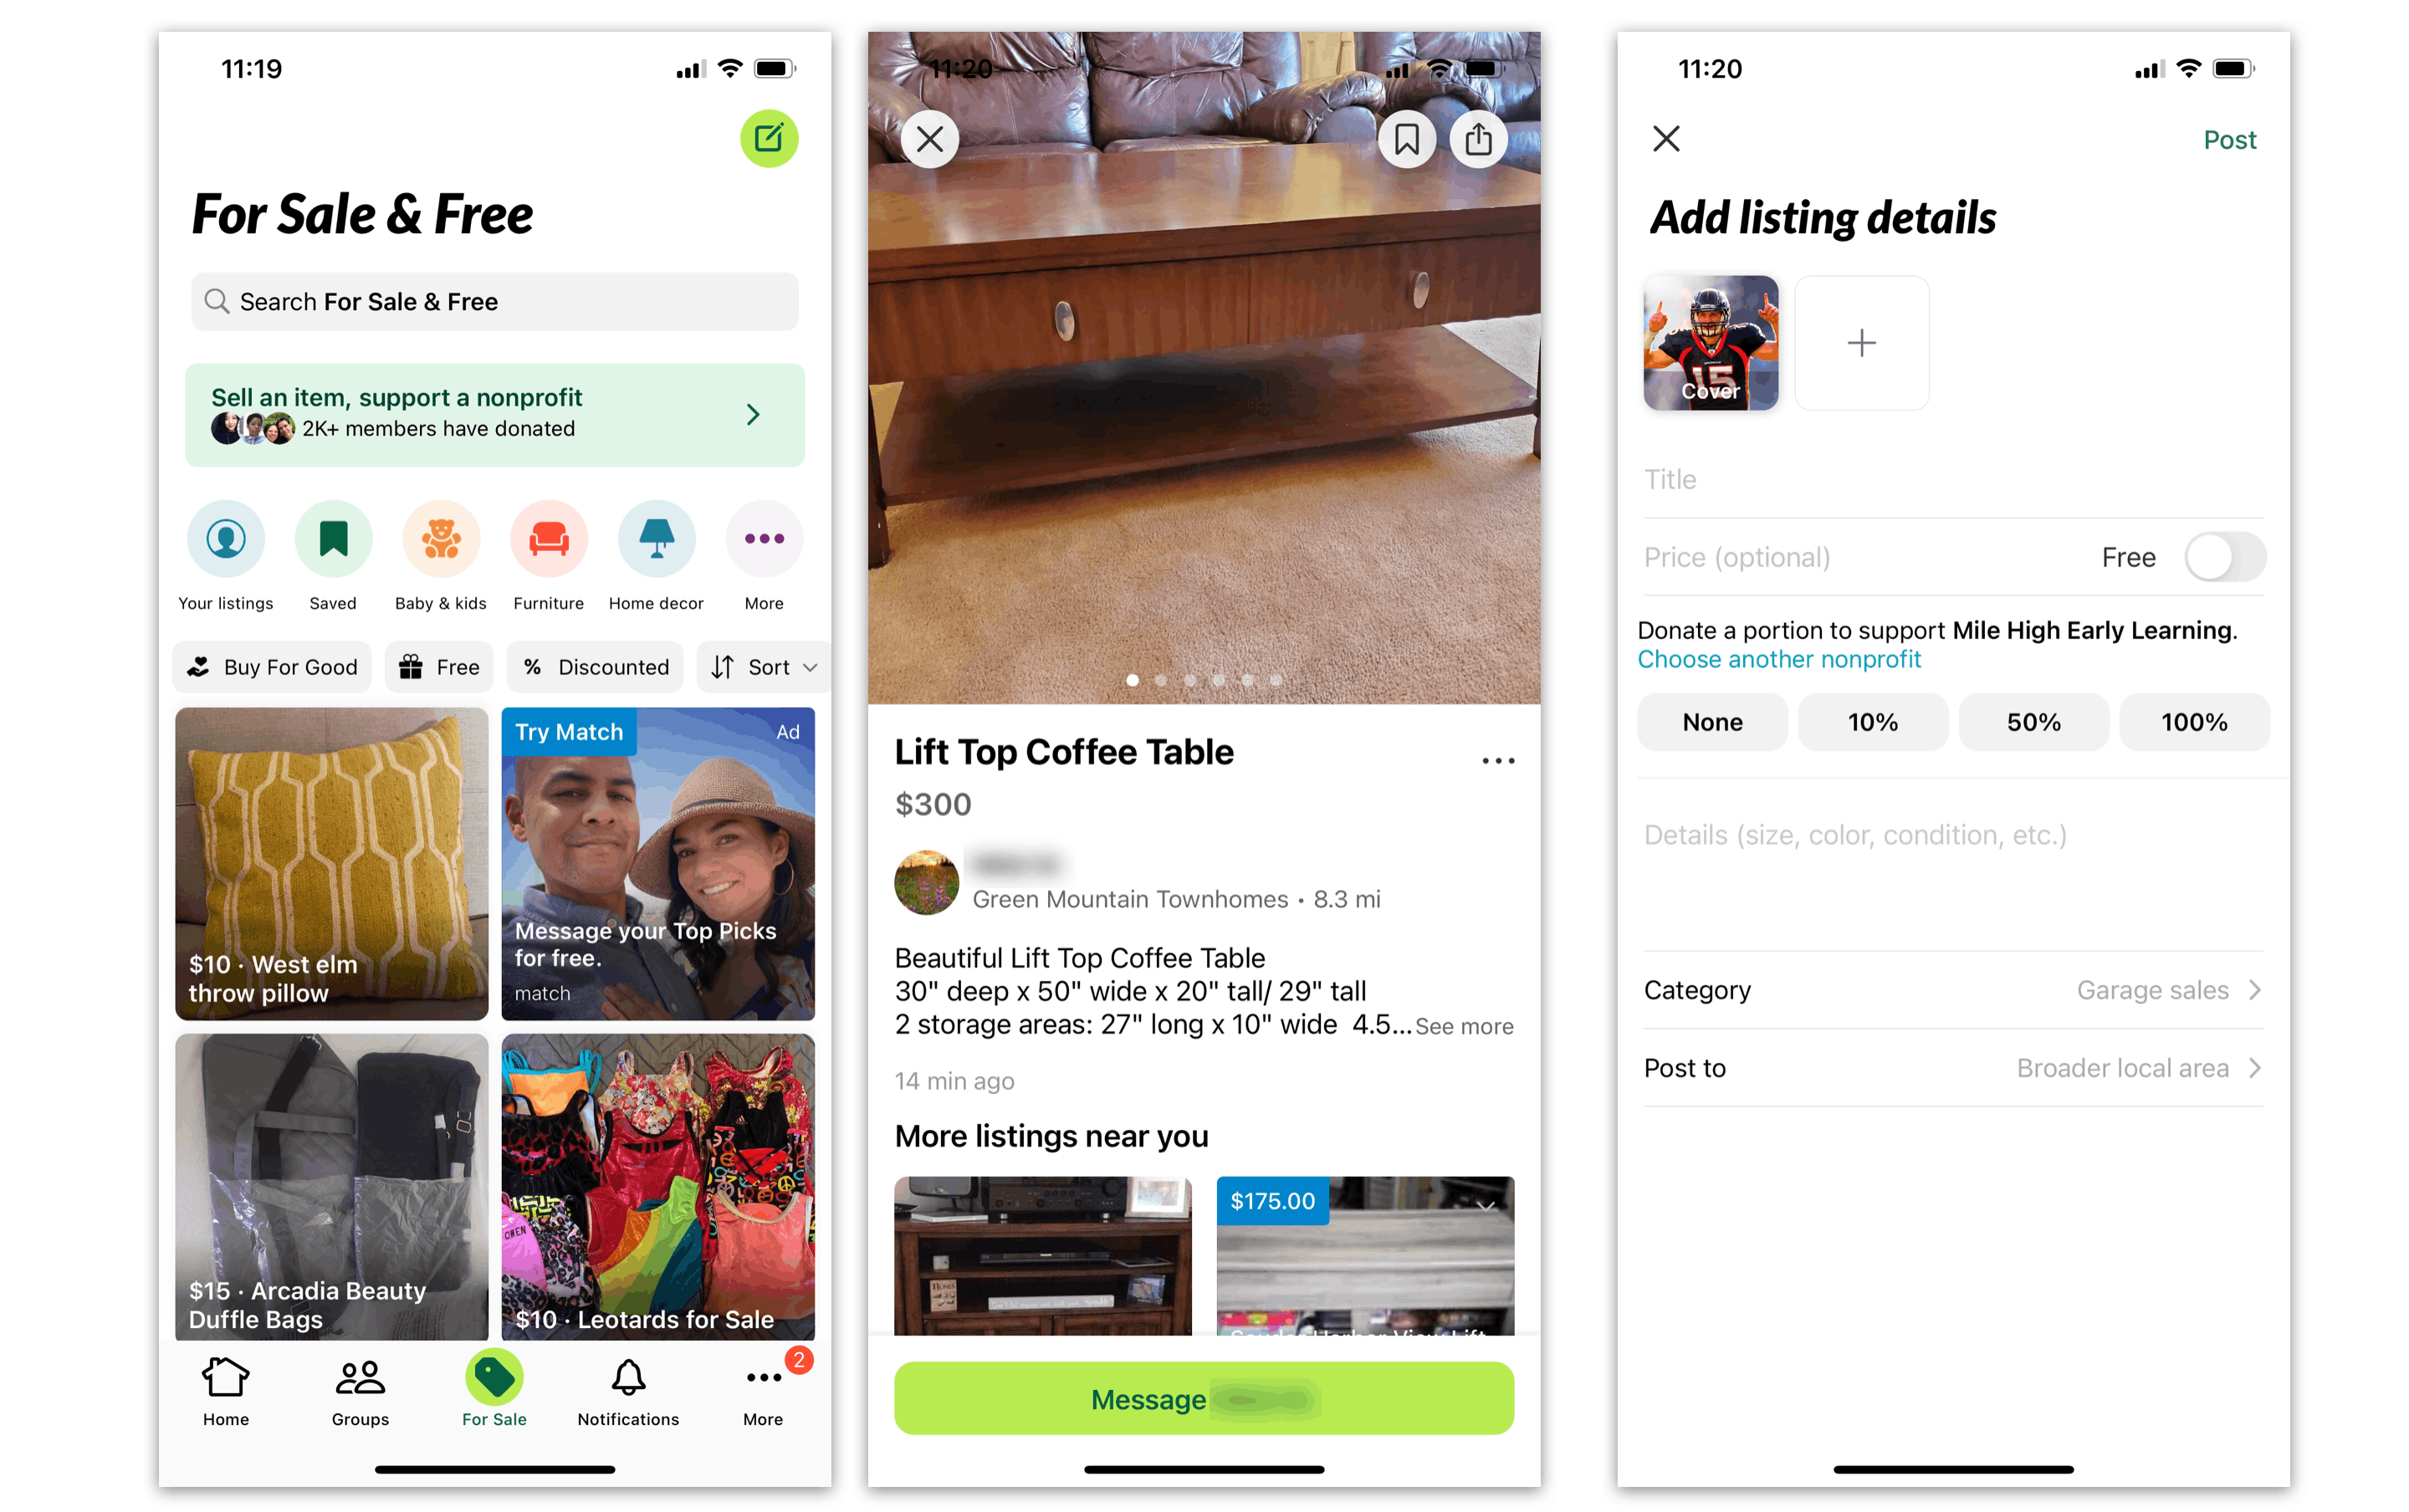 Nextdoor's marketplace uses in-app chat to help focus on community